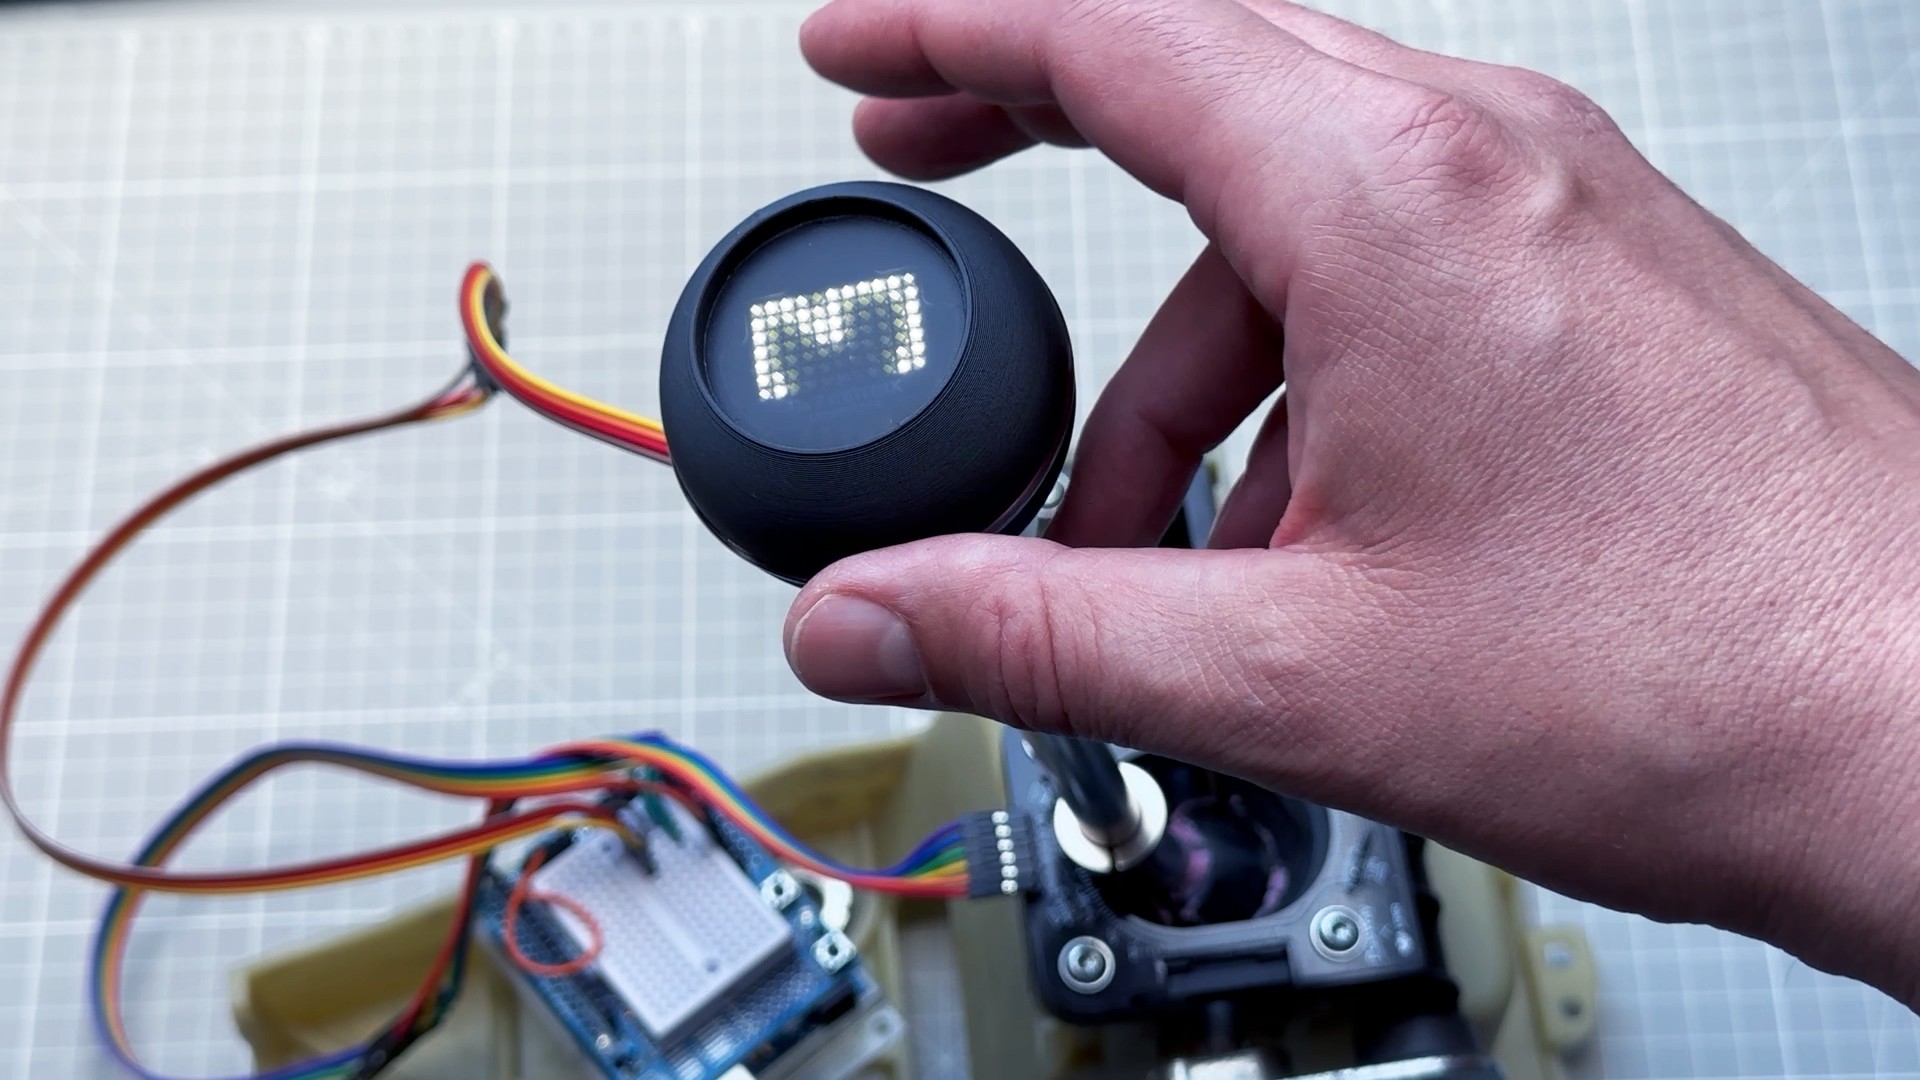 DIY shifter knob gets a beautiful integrated LED gear indicator